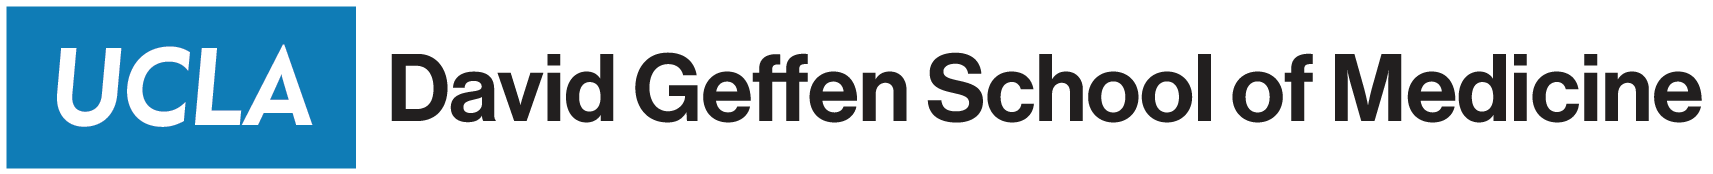 David Geffen School of Medicine Logo